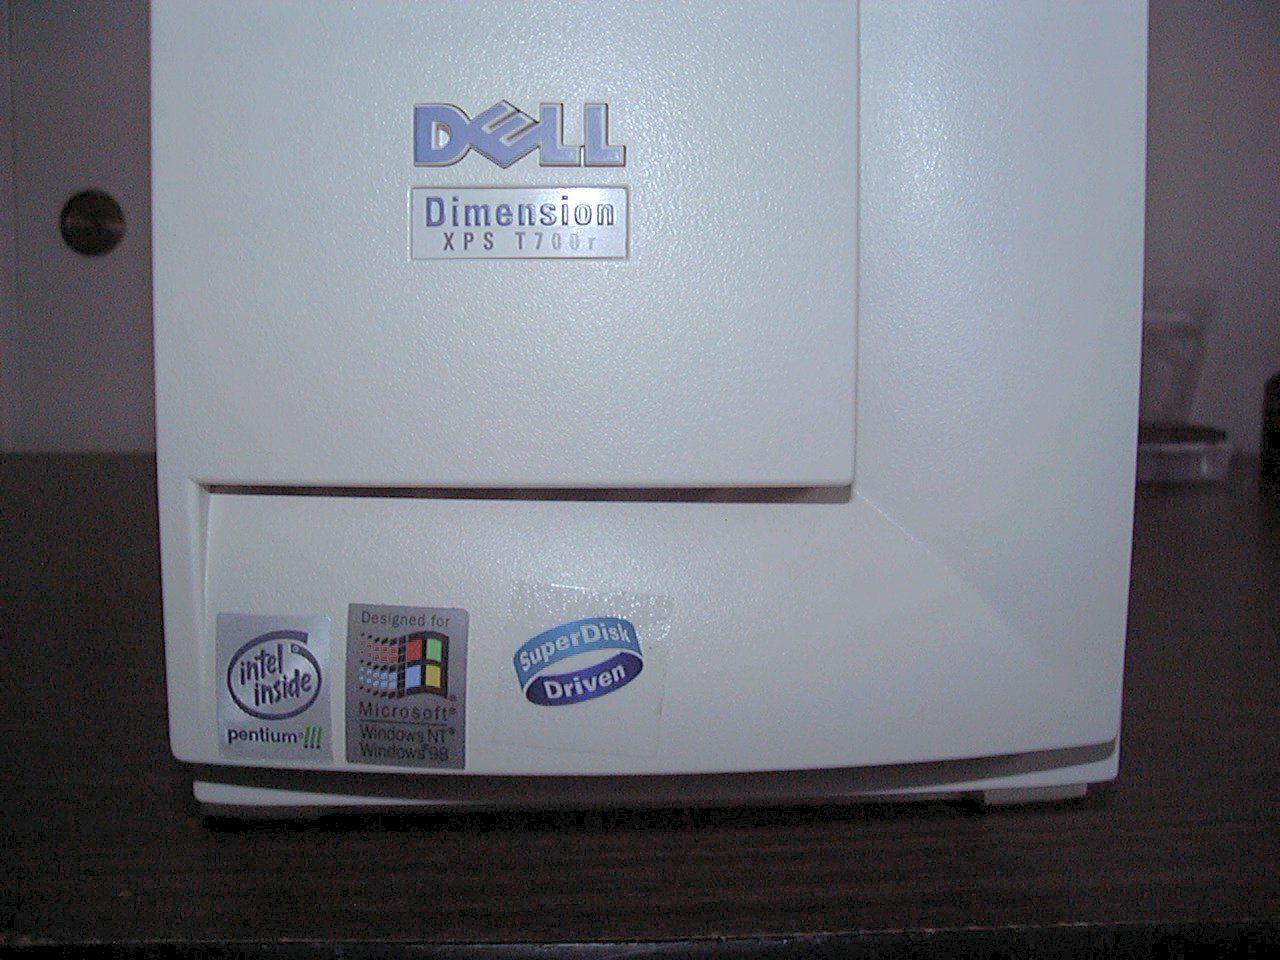 Intel Inside Pentium 3 Logo - Frank Hearth's Dimension T700r Upgrade Pictures